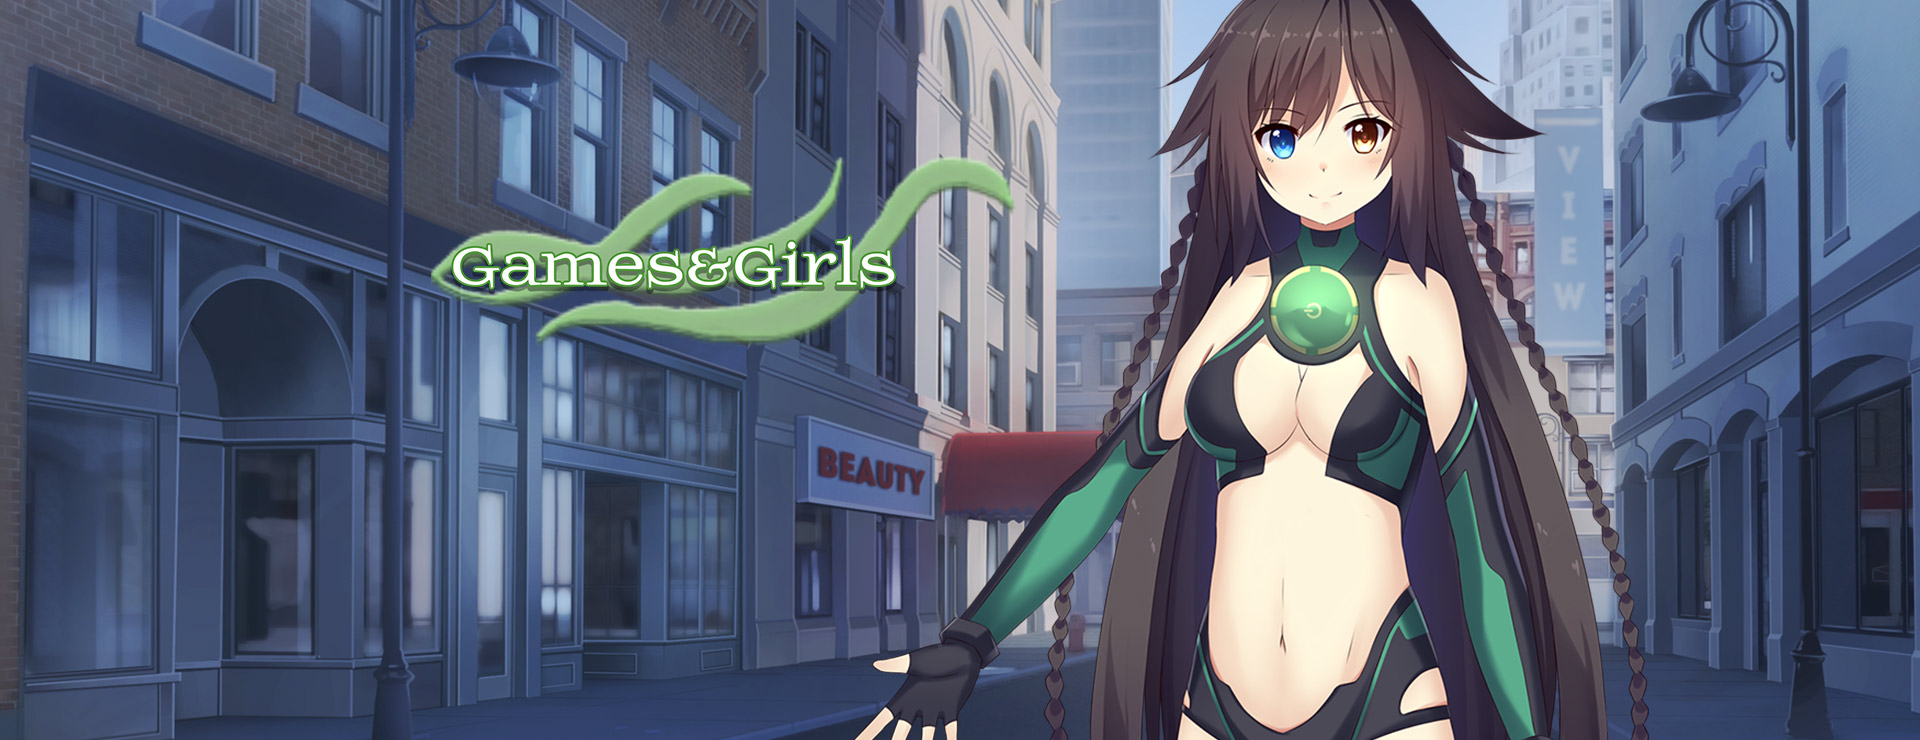 Games&Girls - Visual Novel Game